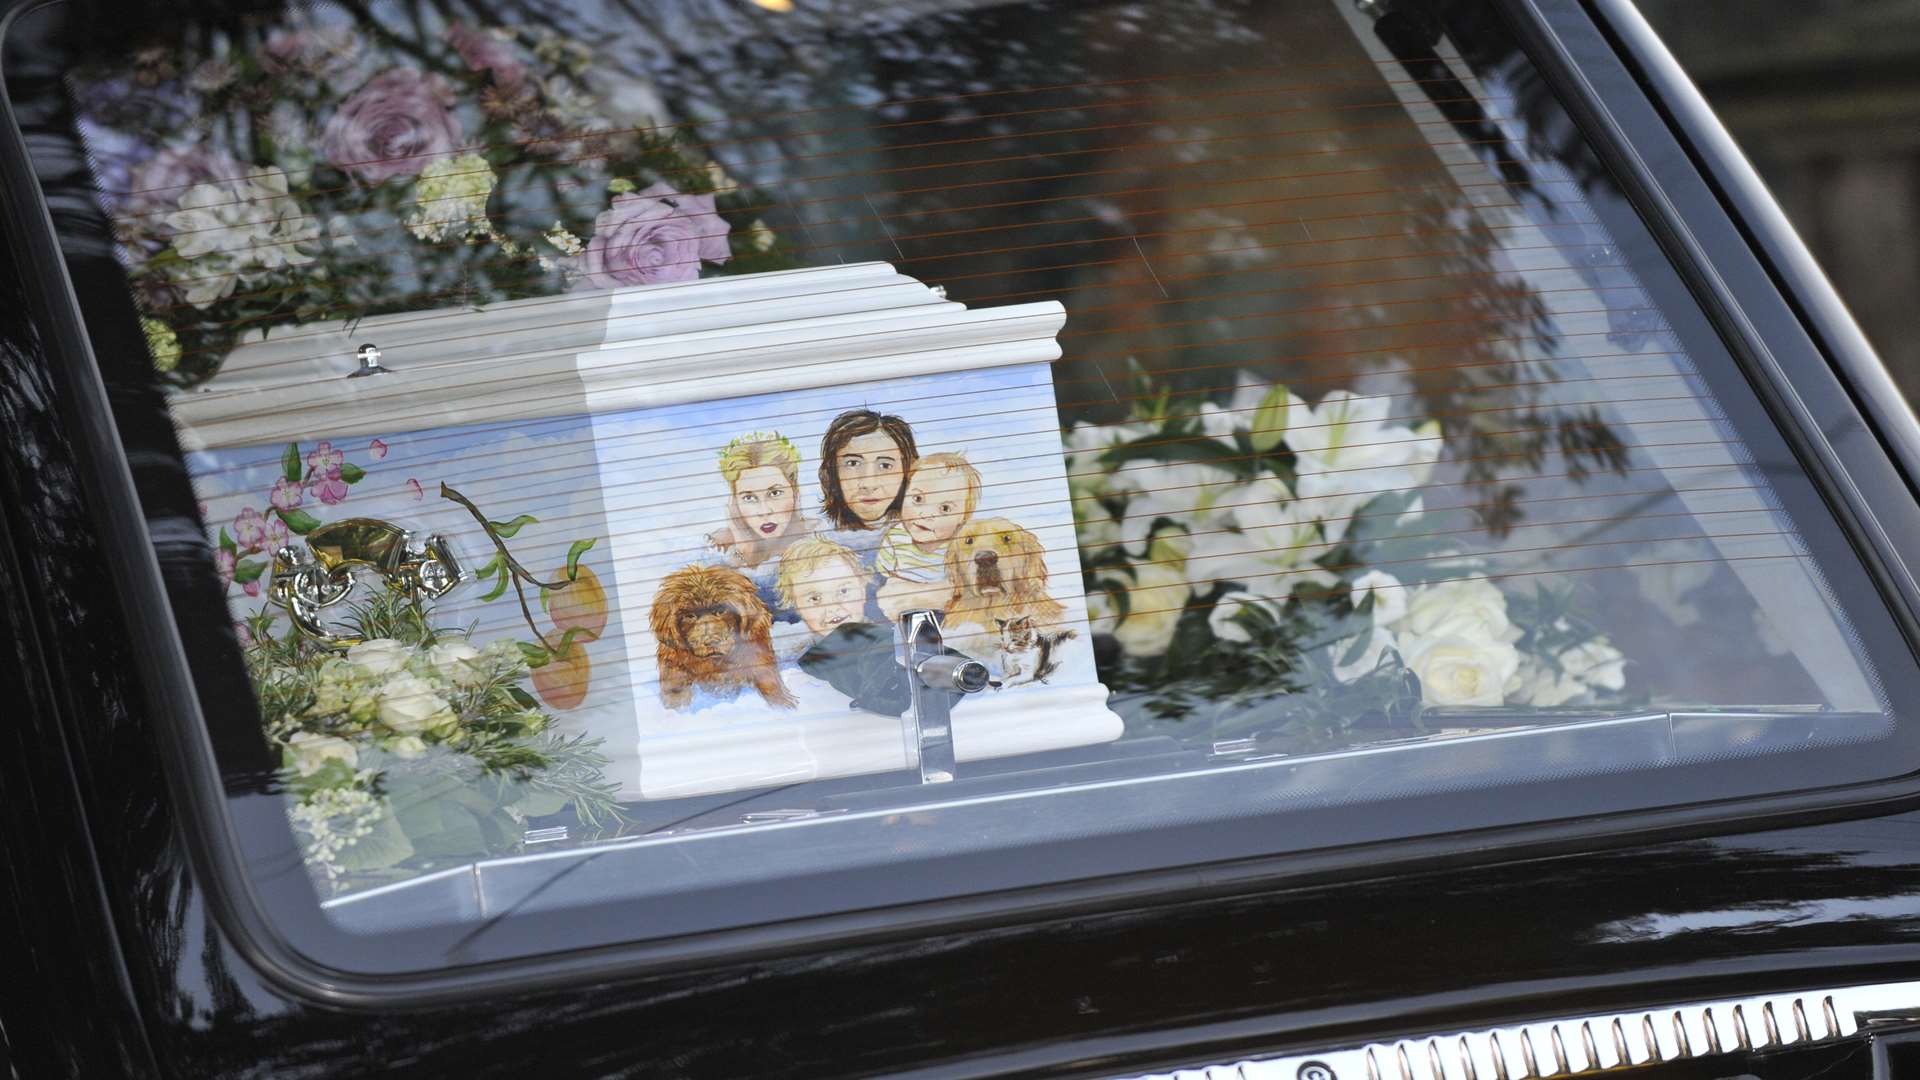 The funeral of Peaches Geldof took place at Davington Church in Faversham.